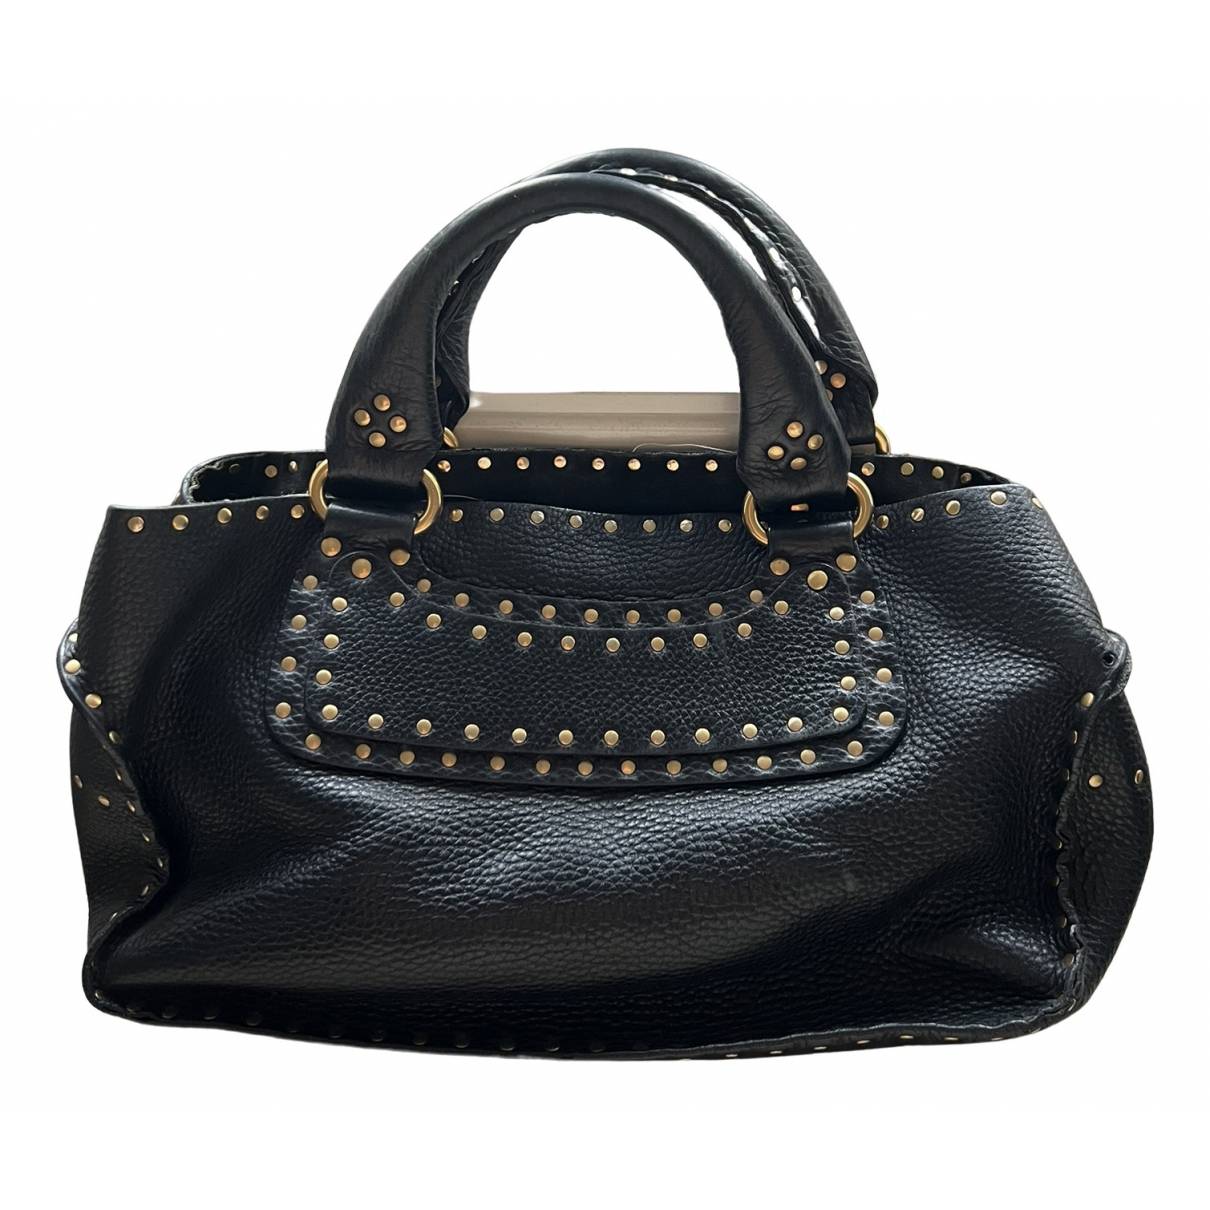 Boogie leather handbag Celine